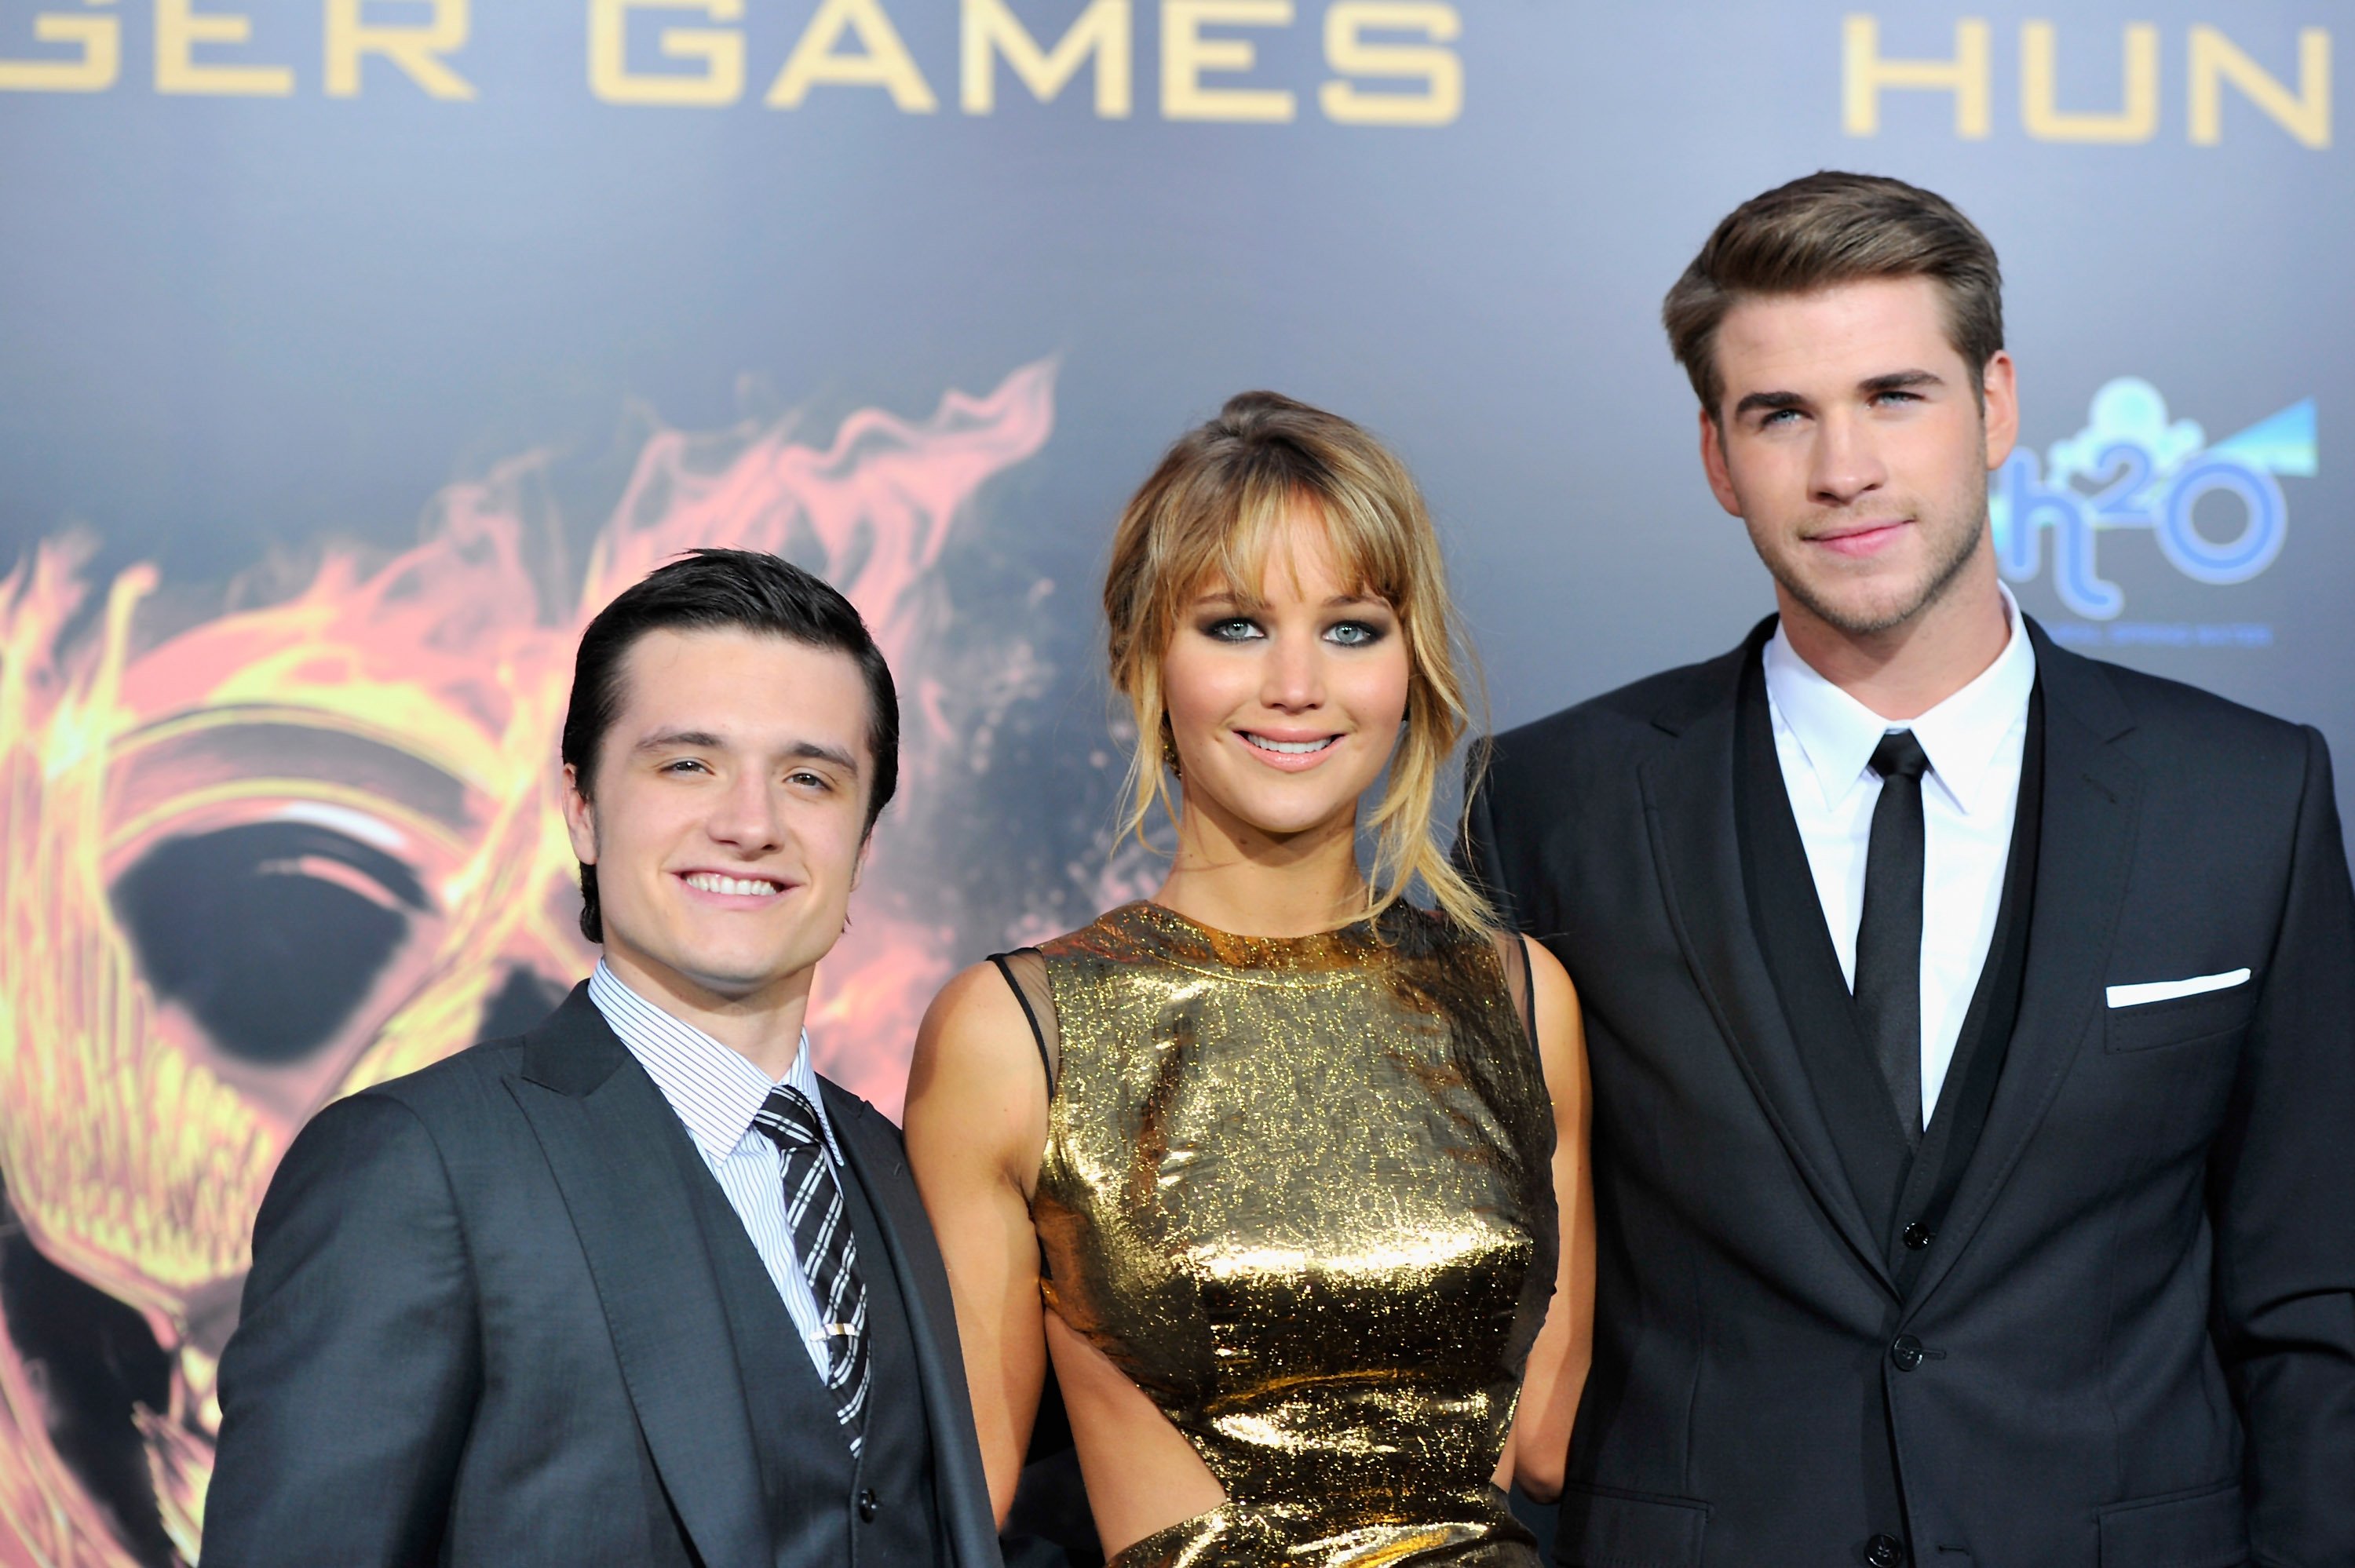 The Hunger Games movies stars Josh Hutcherson and Liam Hemsworth